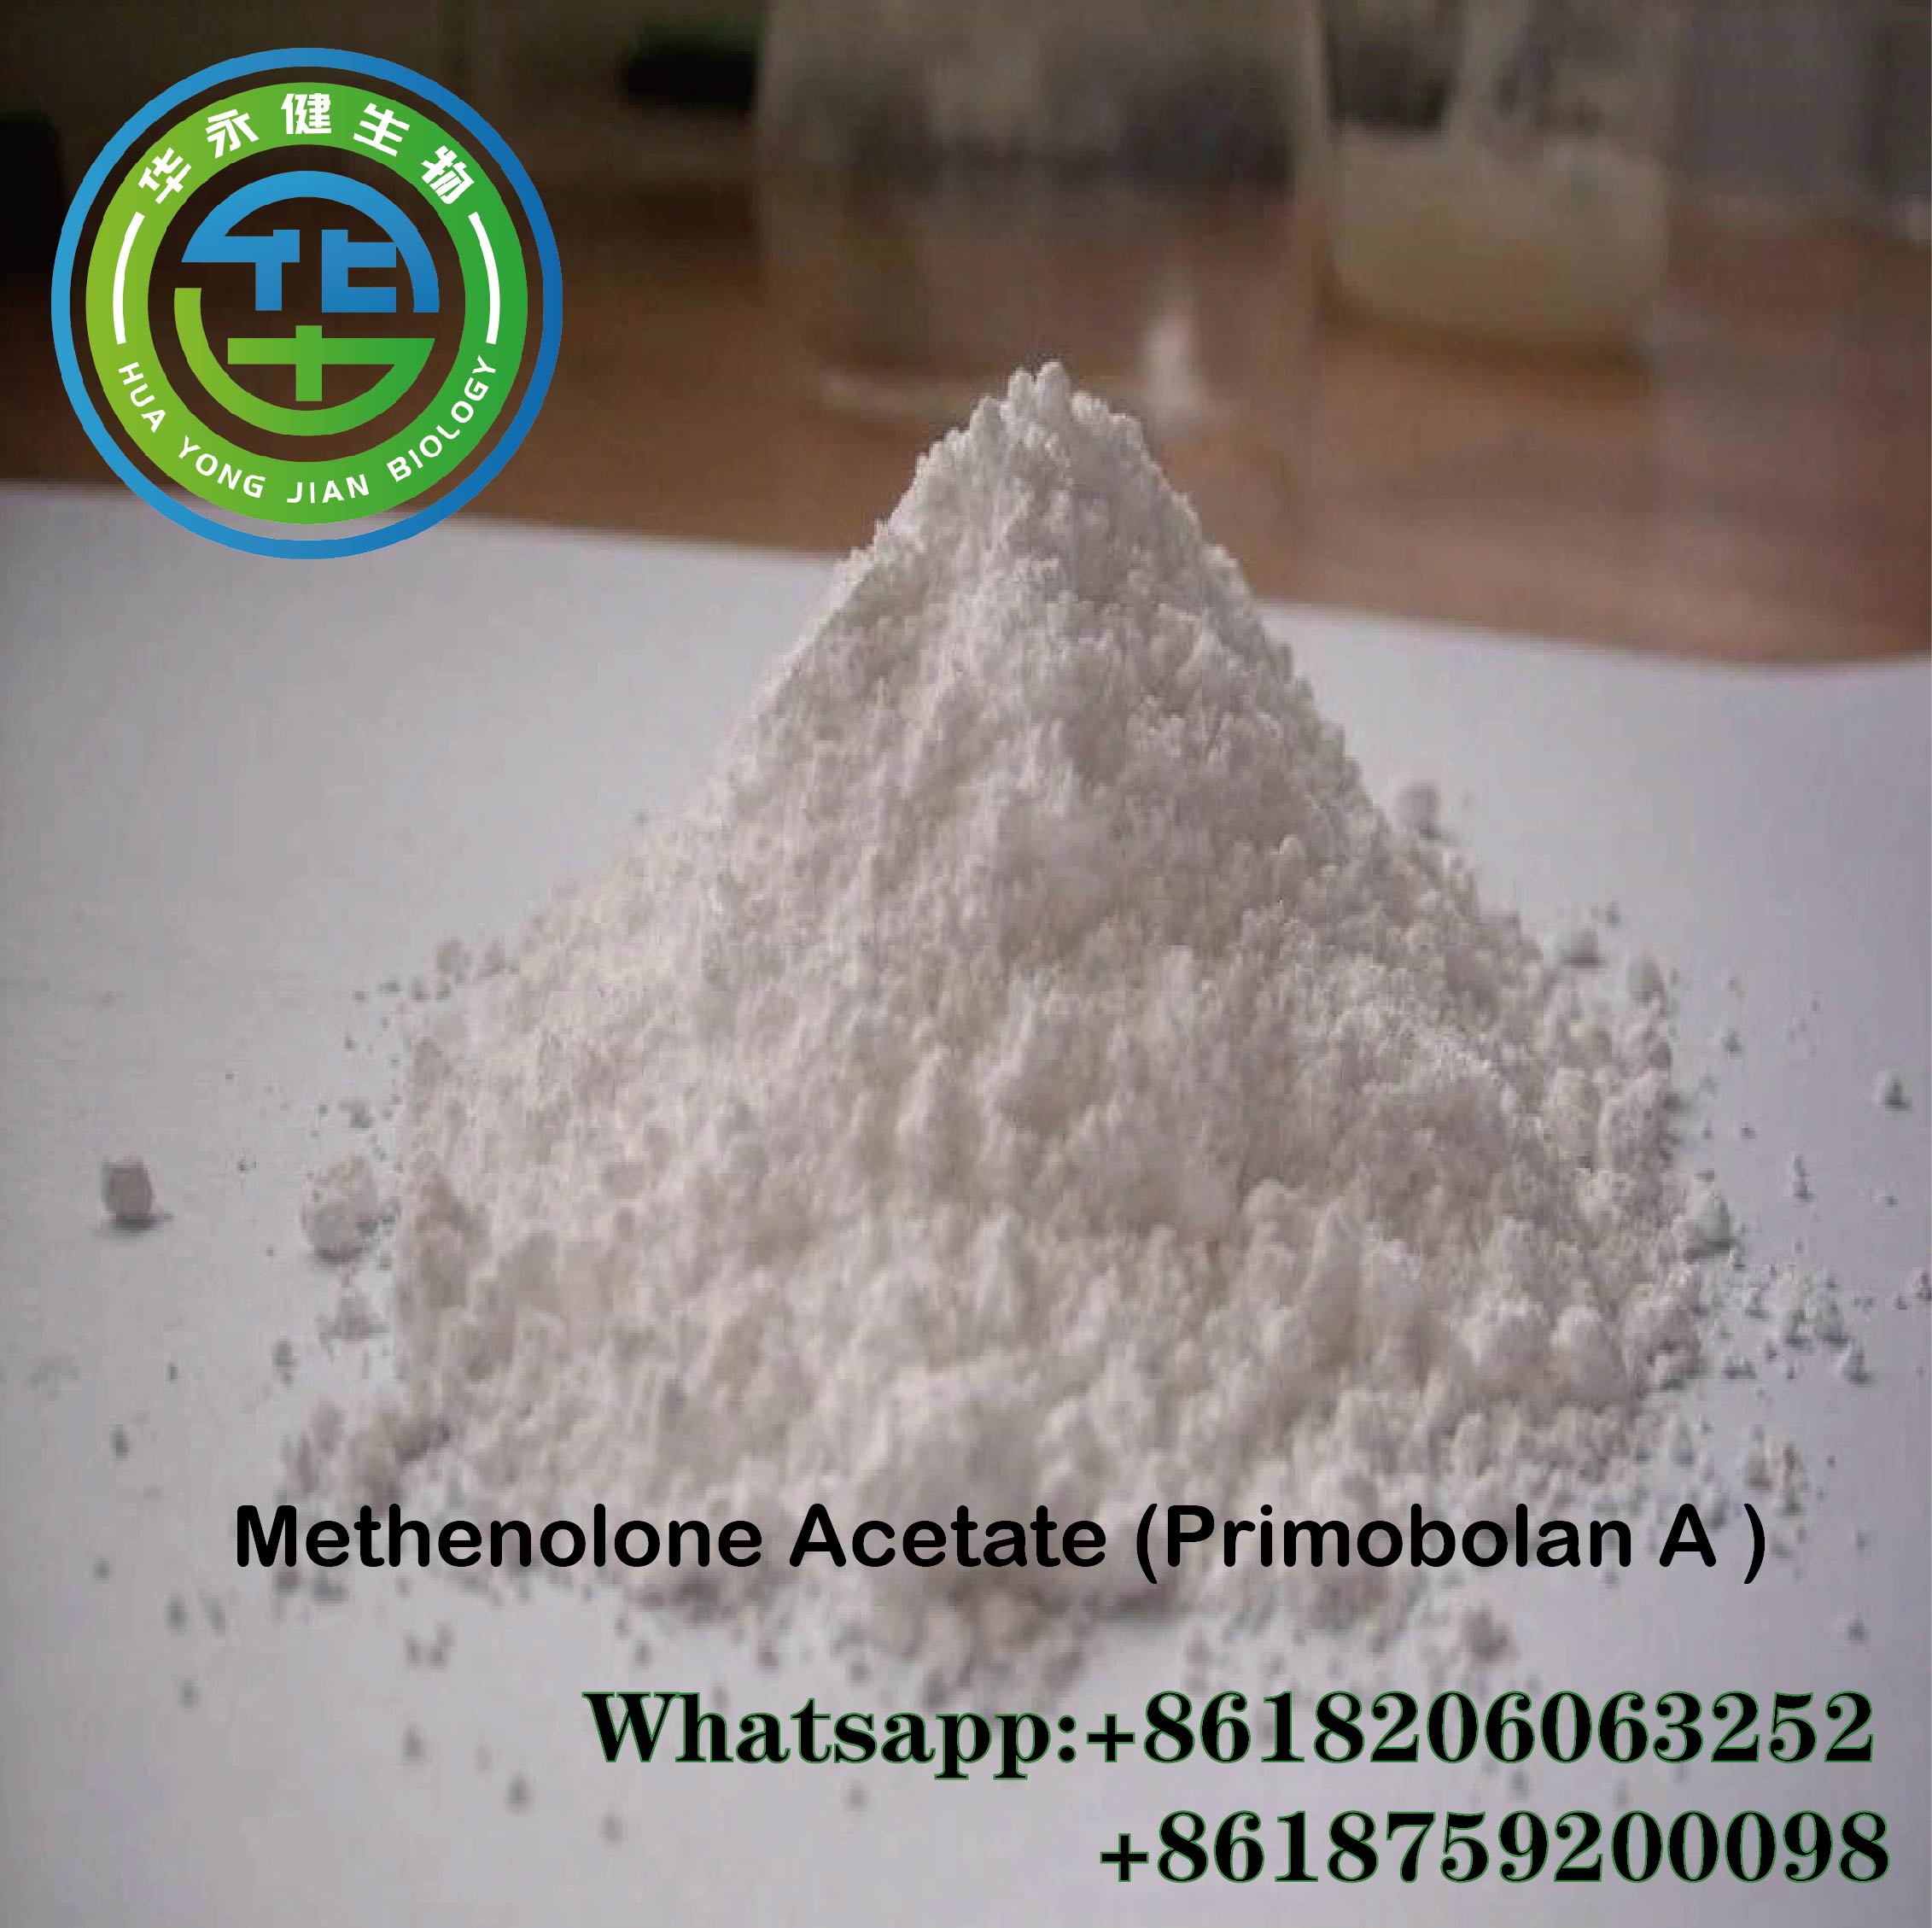 Pharmaceutical Intermediate Methenolone Acetate Raw Steroid Primobolan A Powder CAS 434-05-9 